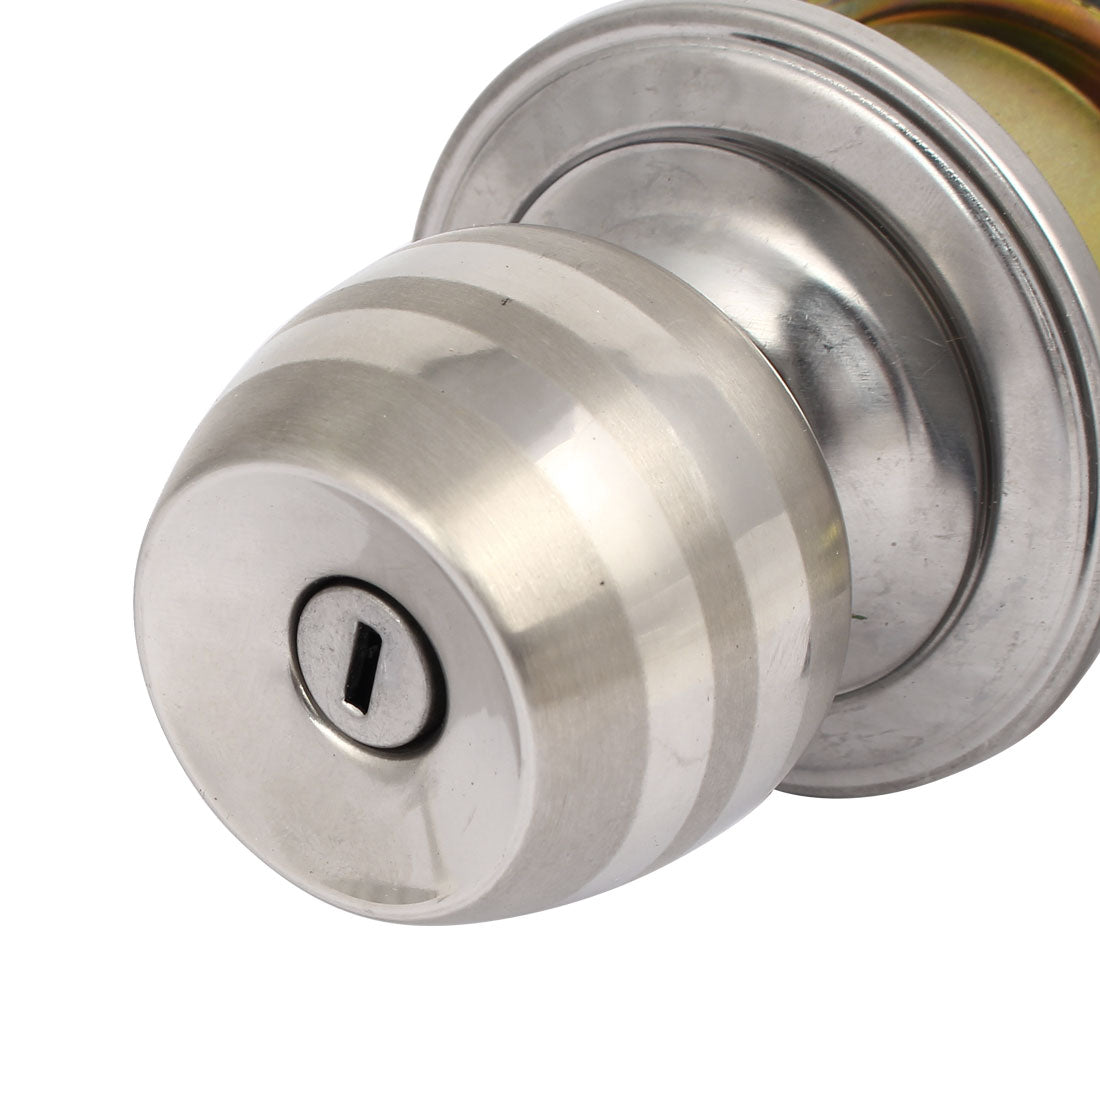 uxcell Uxcell Household Bedroom Metal Privacy Round Handle Knob Door Lock Lock Set